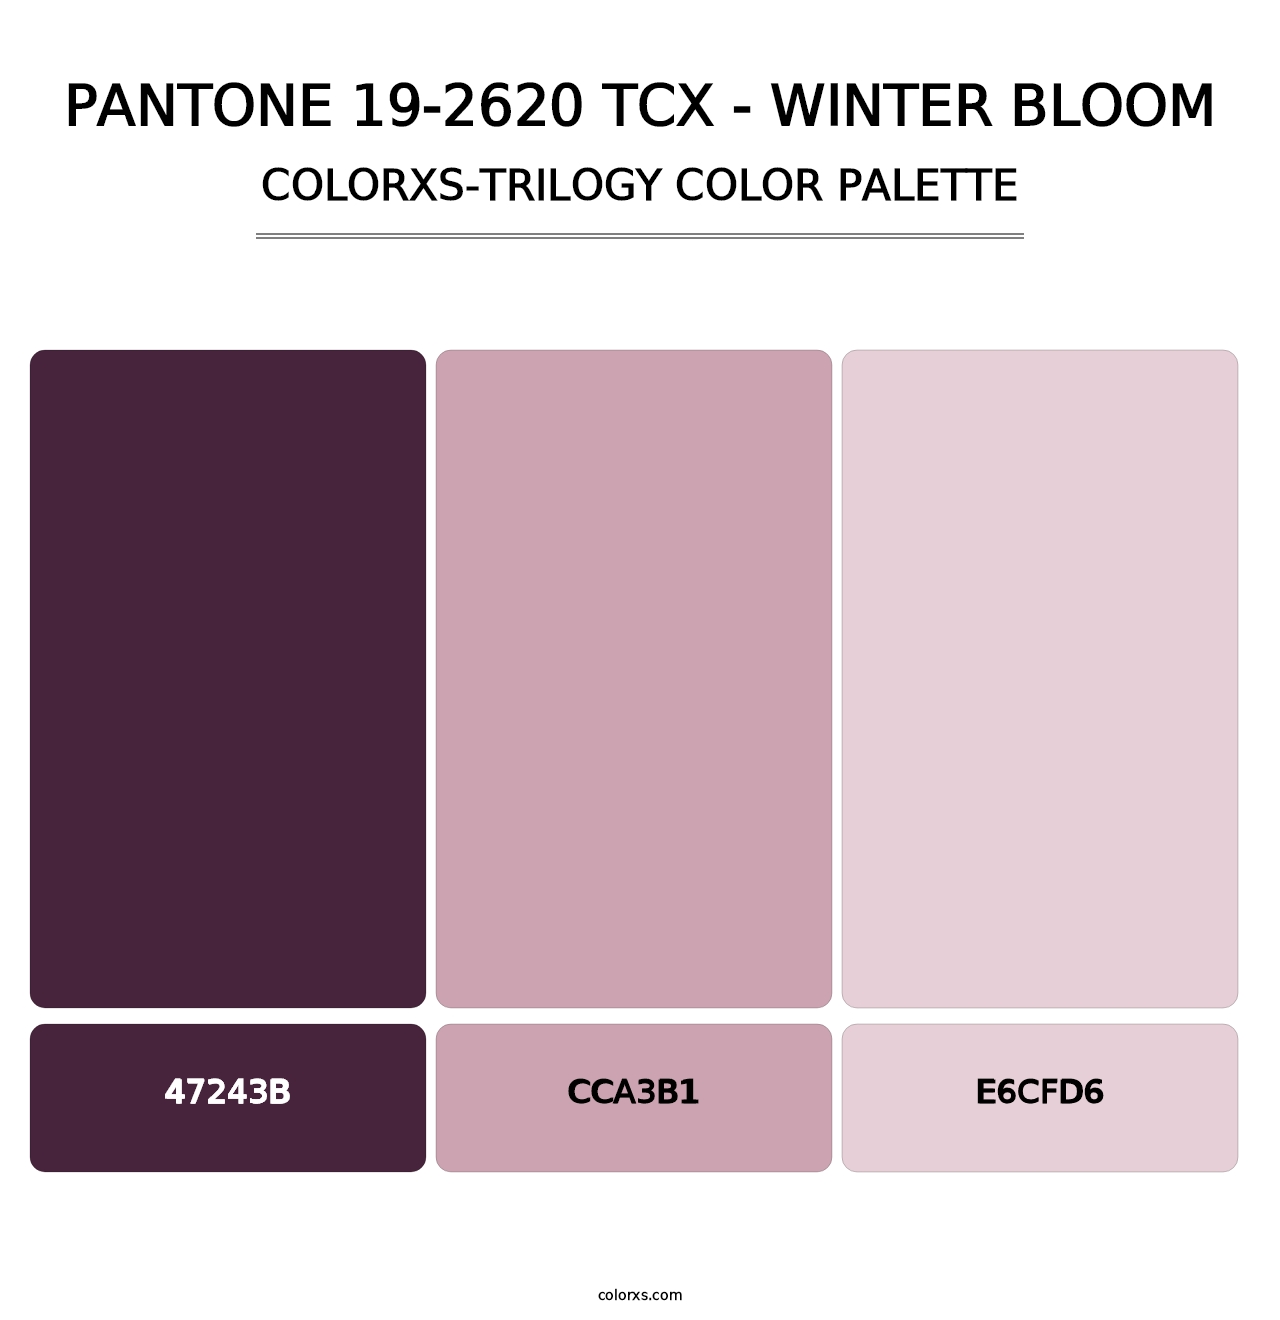 PANTONE 19-2620 TCX - Winter Bloom - Colorxs Trilogy Palette